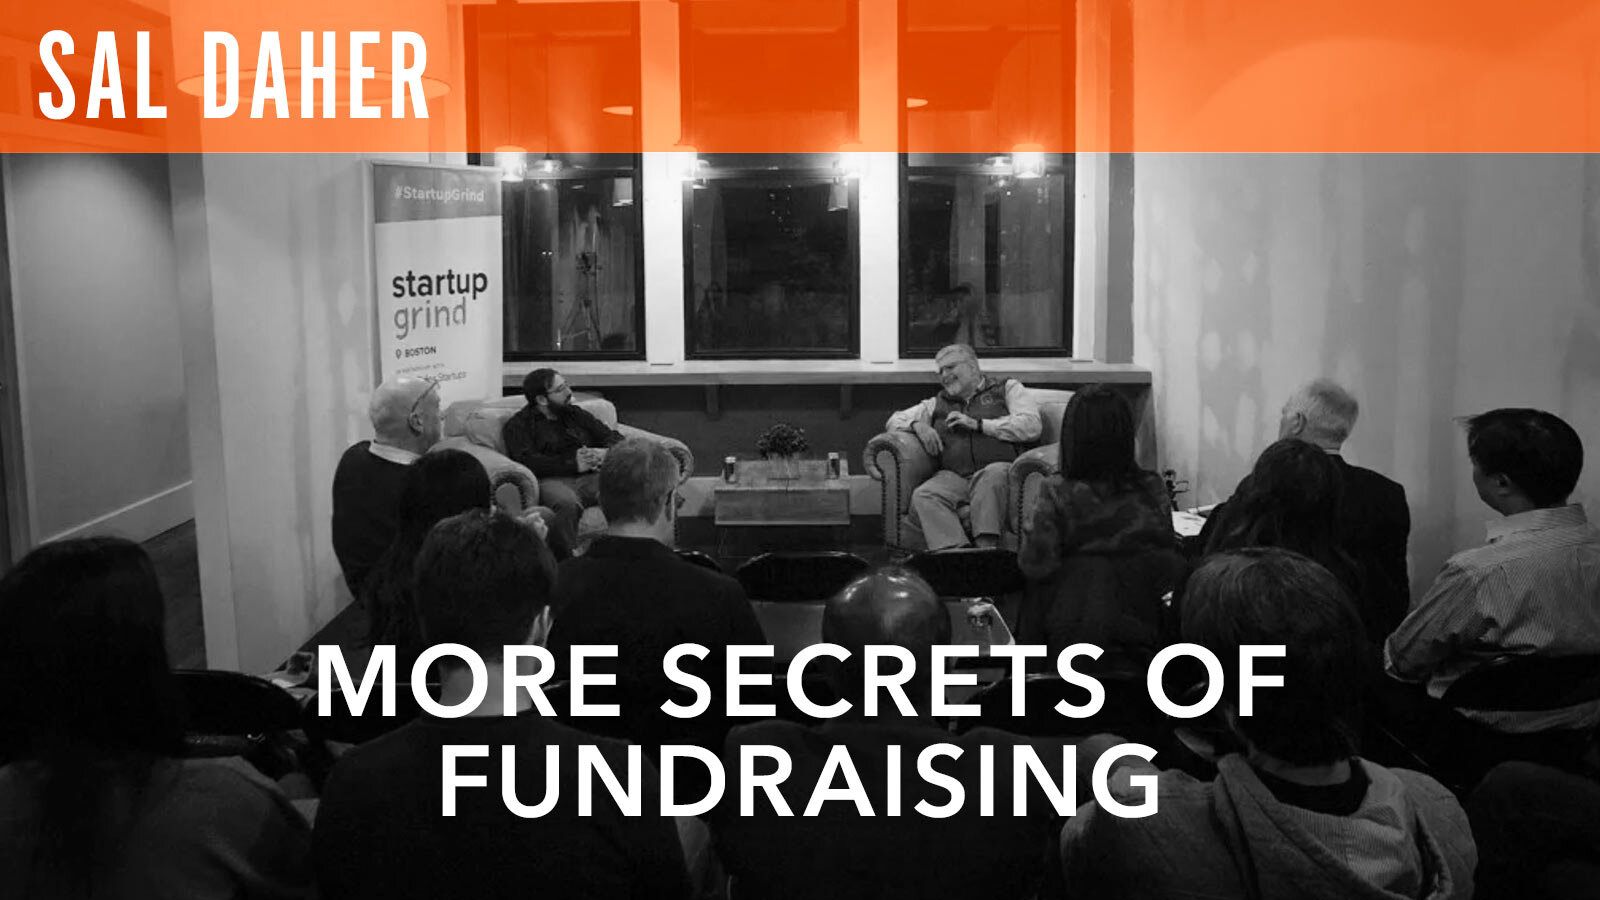 "More Secrets of Fundraising"